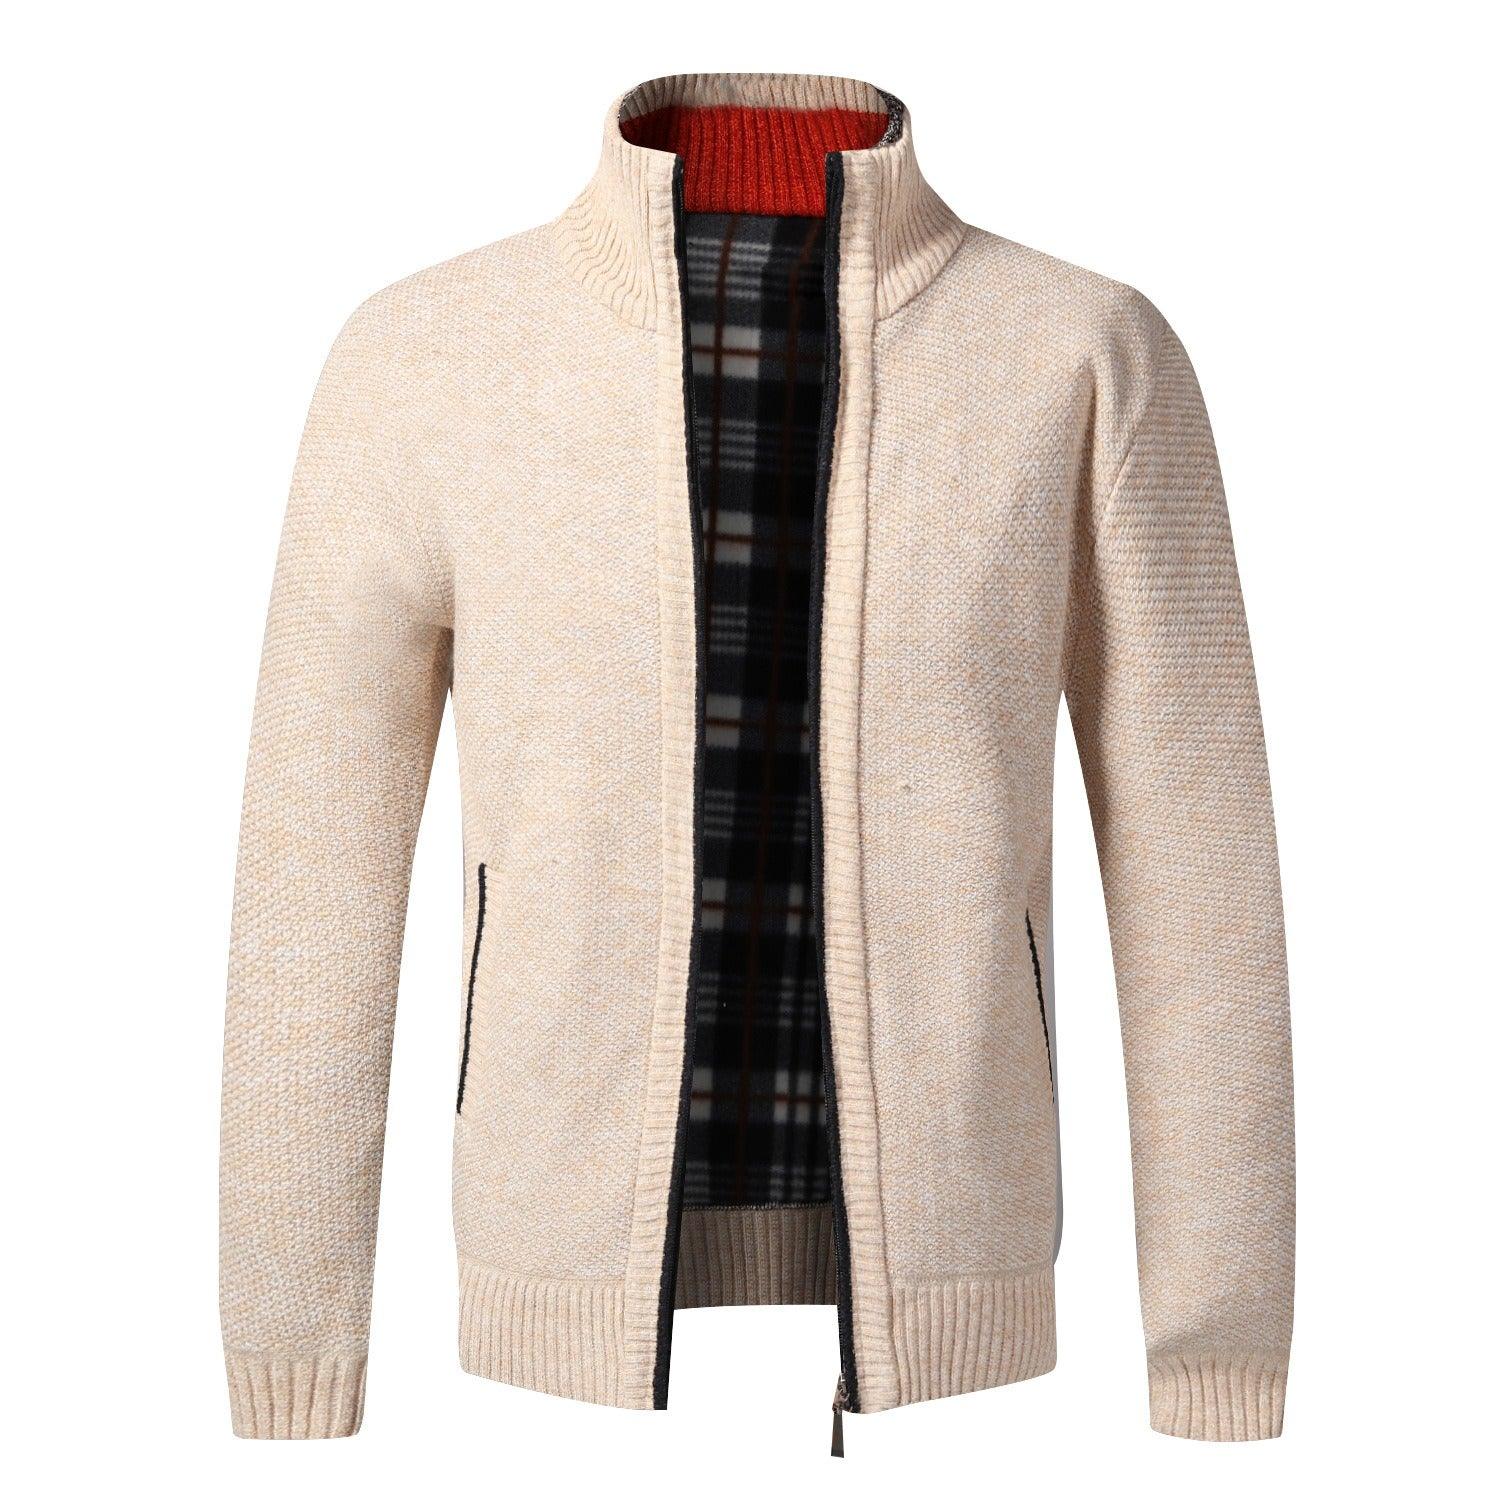 Anellimn comprar melhor jaqueta masculina barata casaco masculino preço moletom masculino